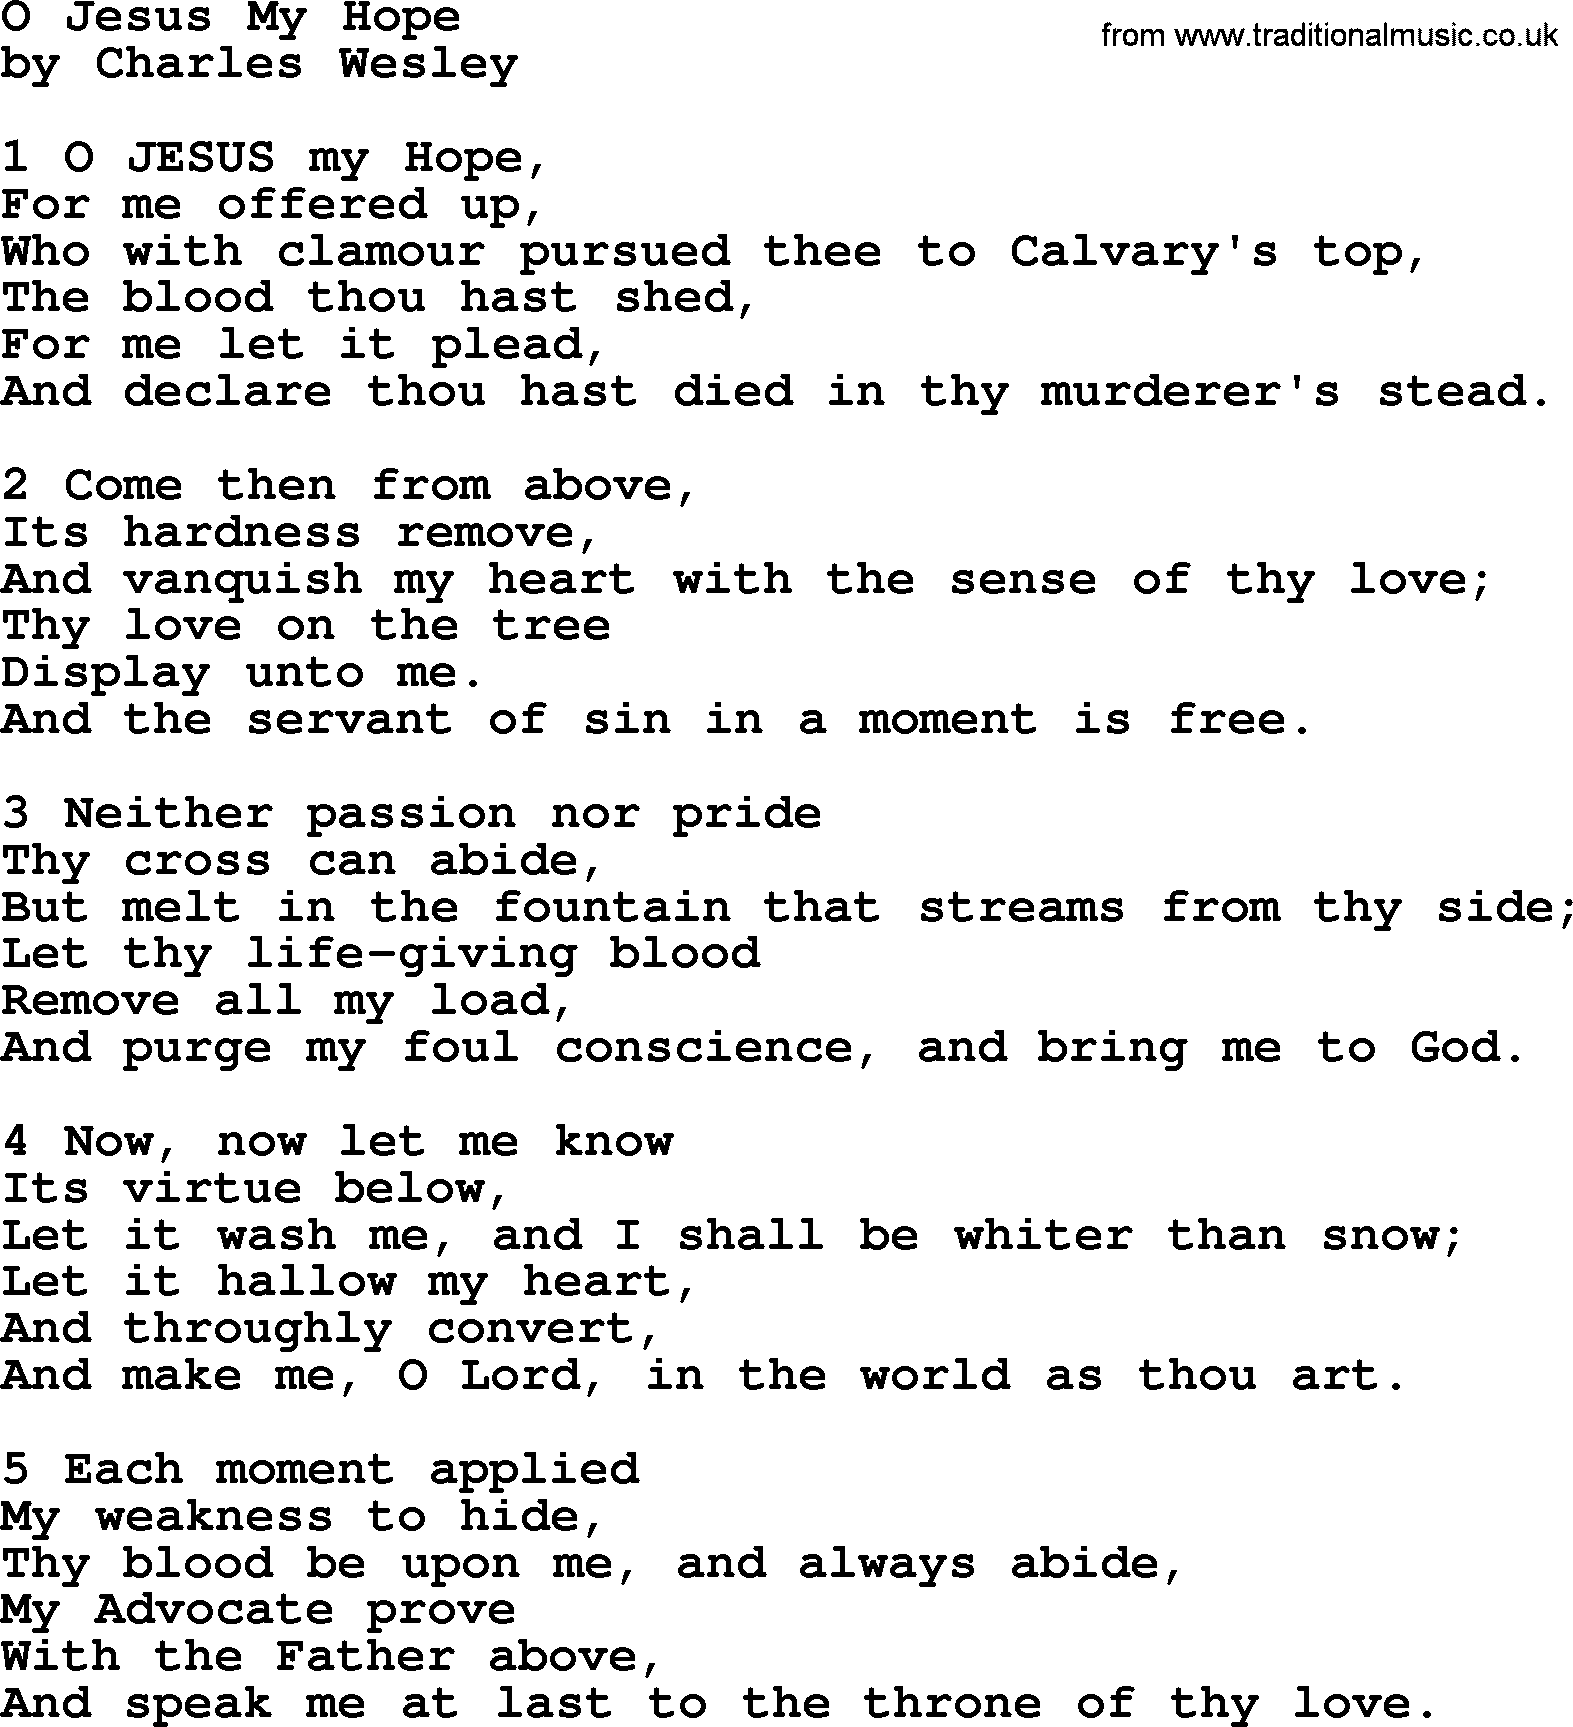 Charles Wesley hymn: O Jesus My Hope, lyrics